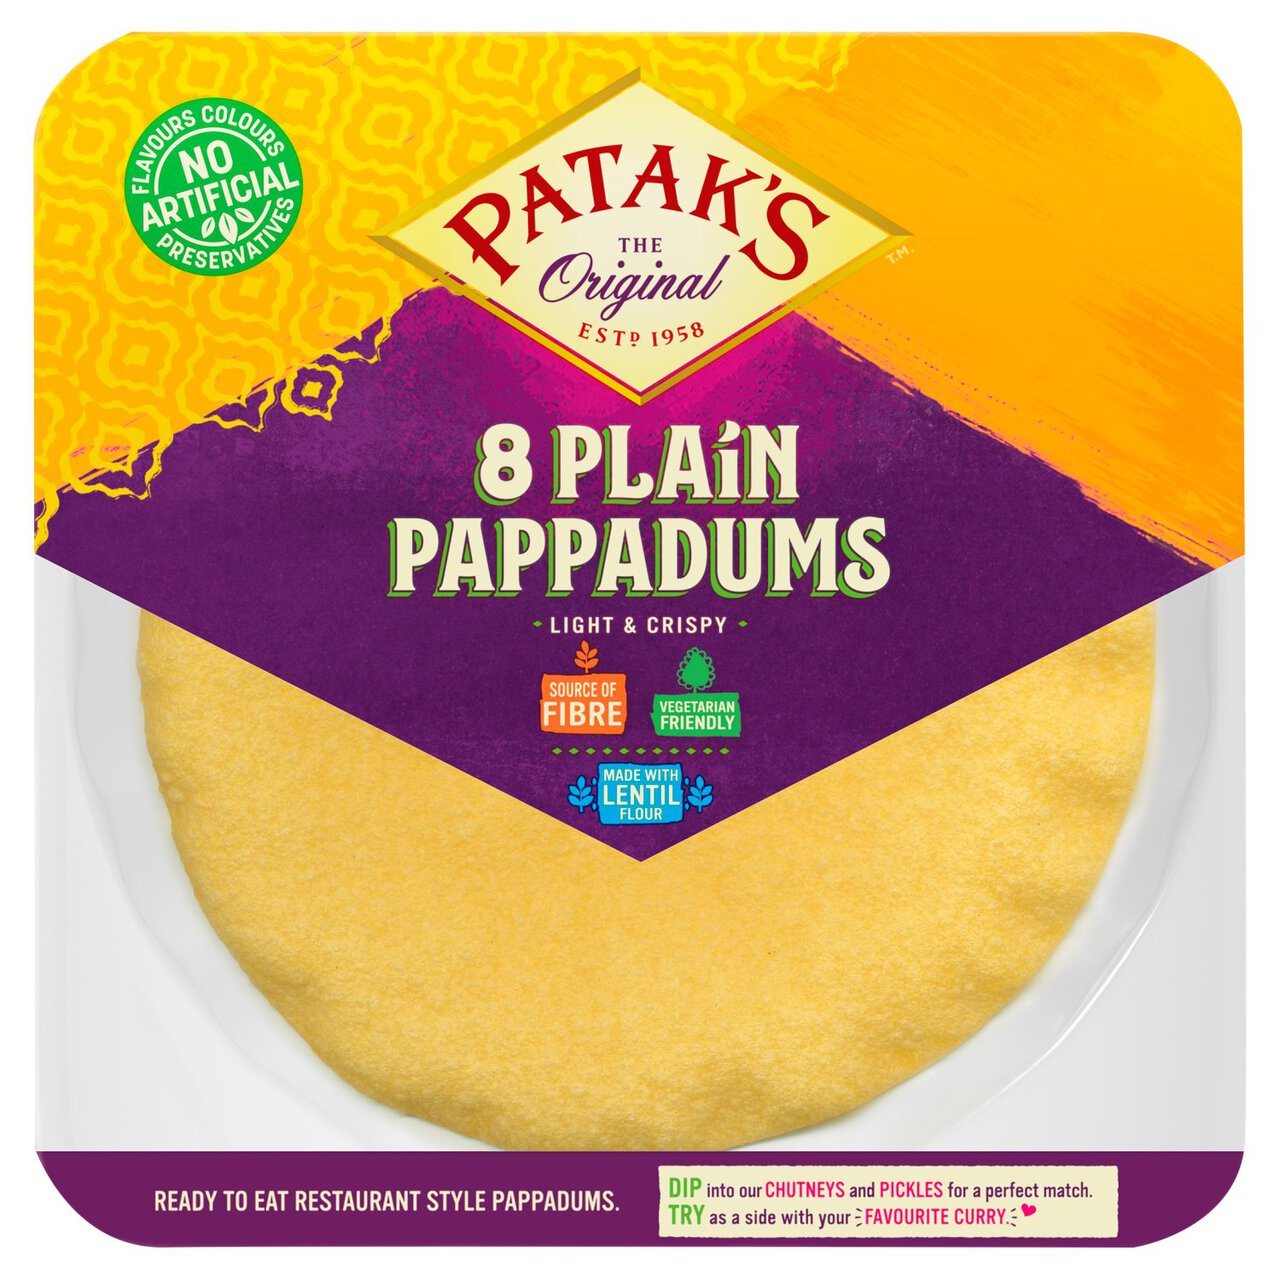 Patak's Plain Pappadums 8 per pack